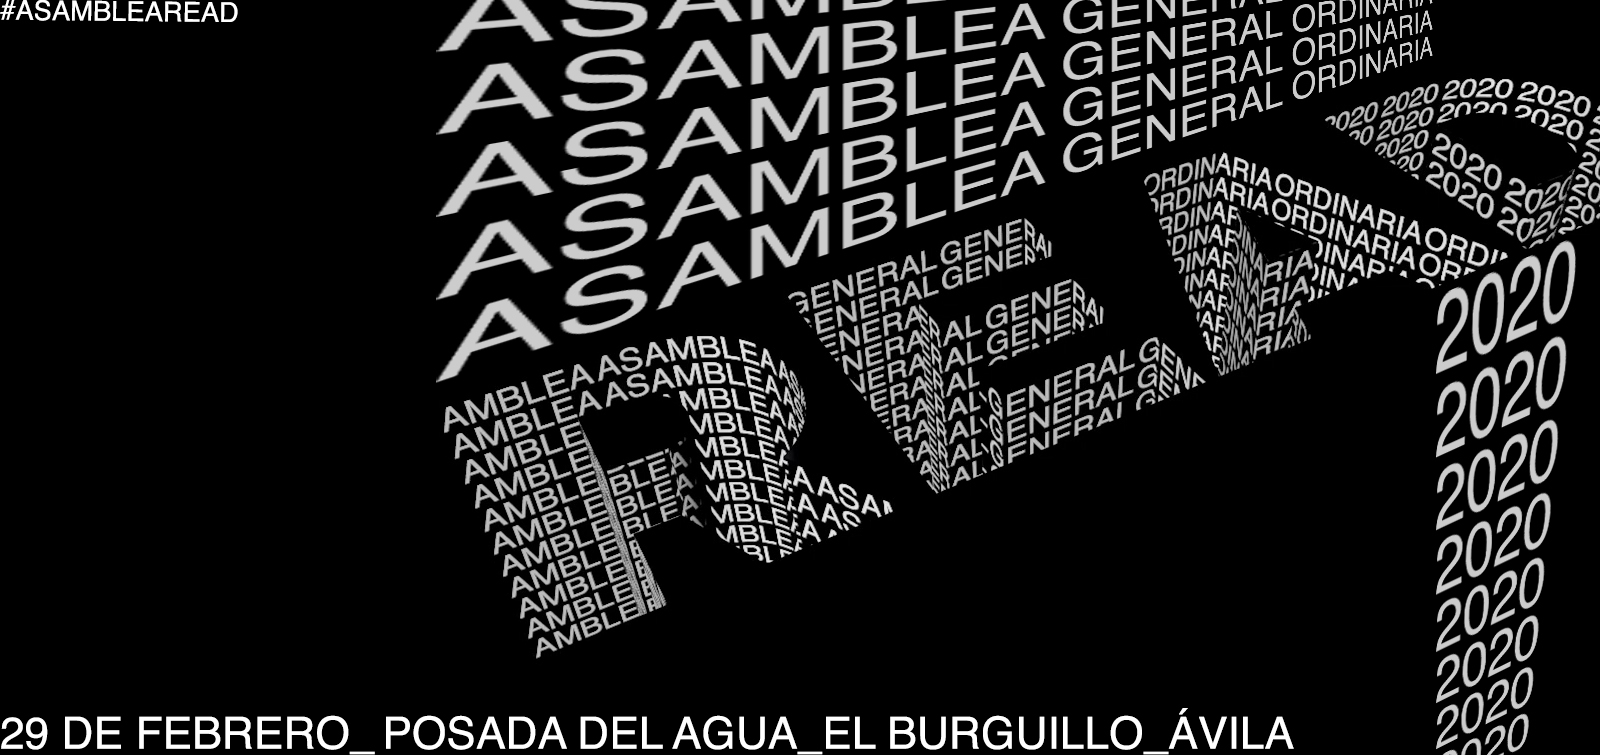 Asamblea READ 2020 by CREATIAS ESTUDIO - Creative Work